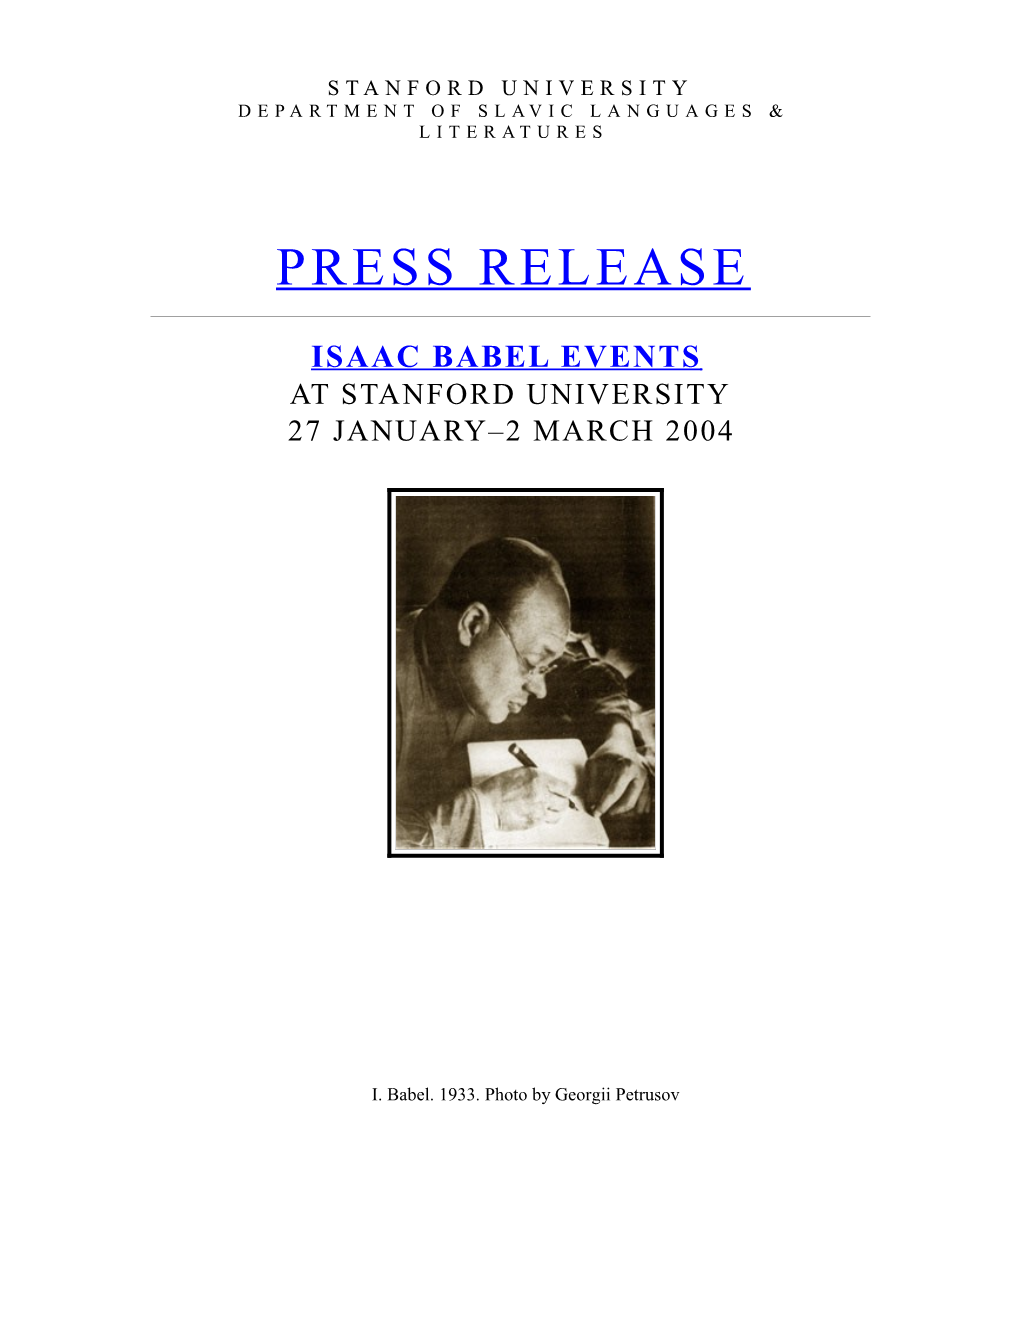 Press Release Isaac Babel